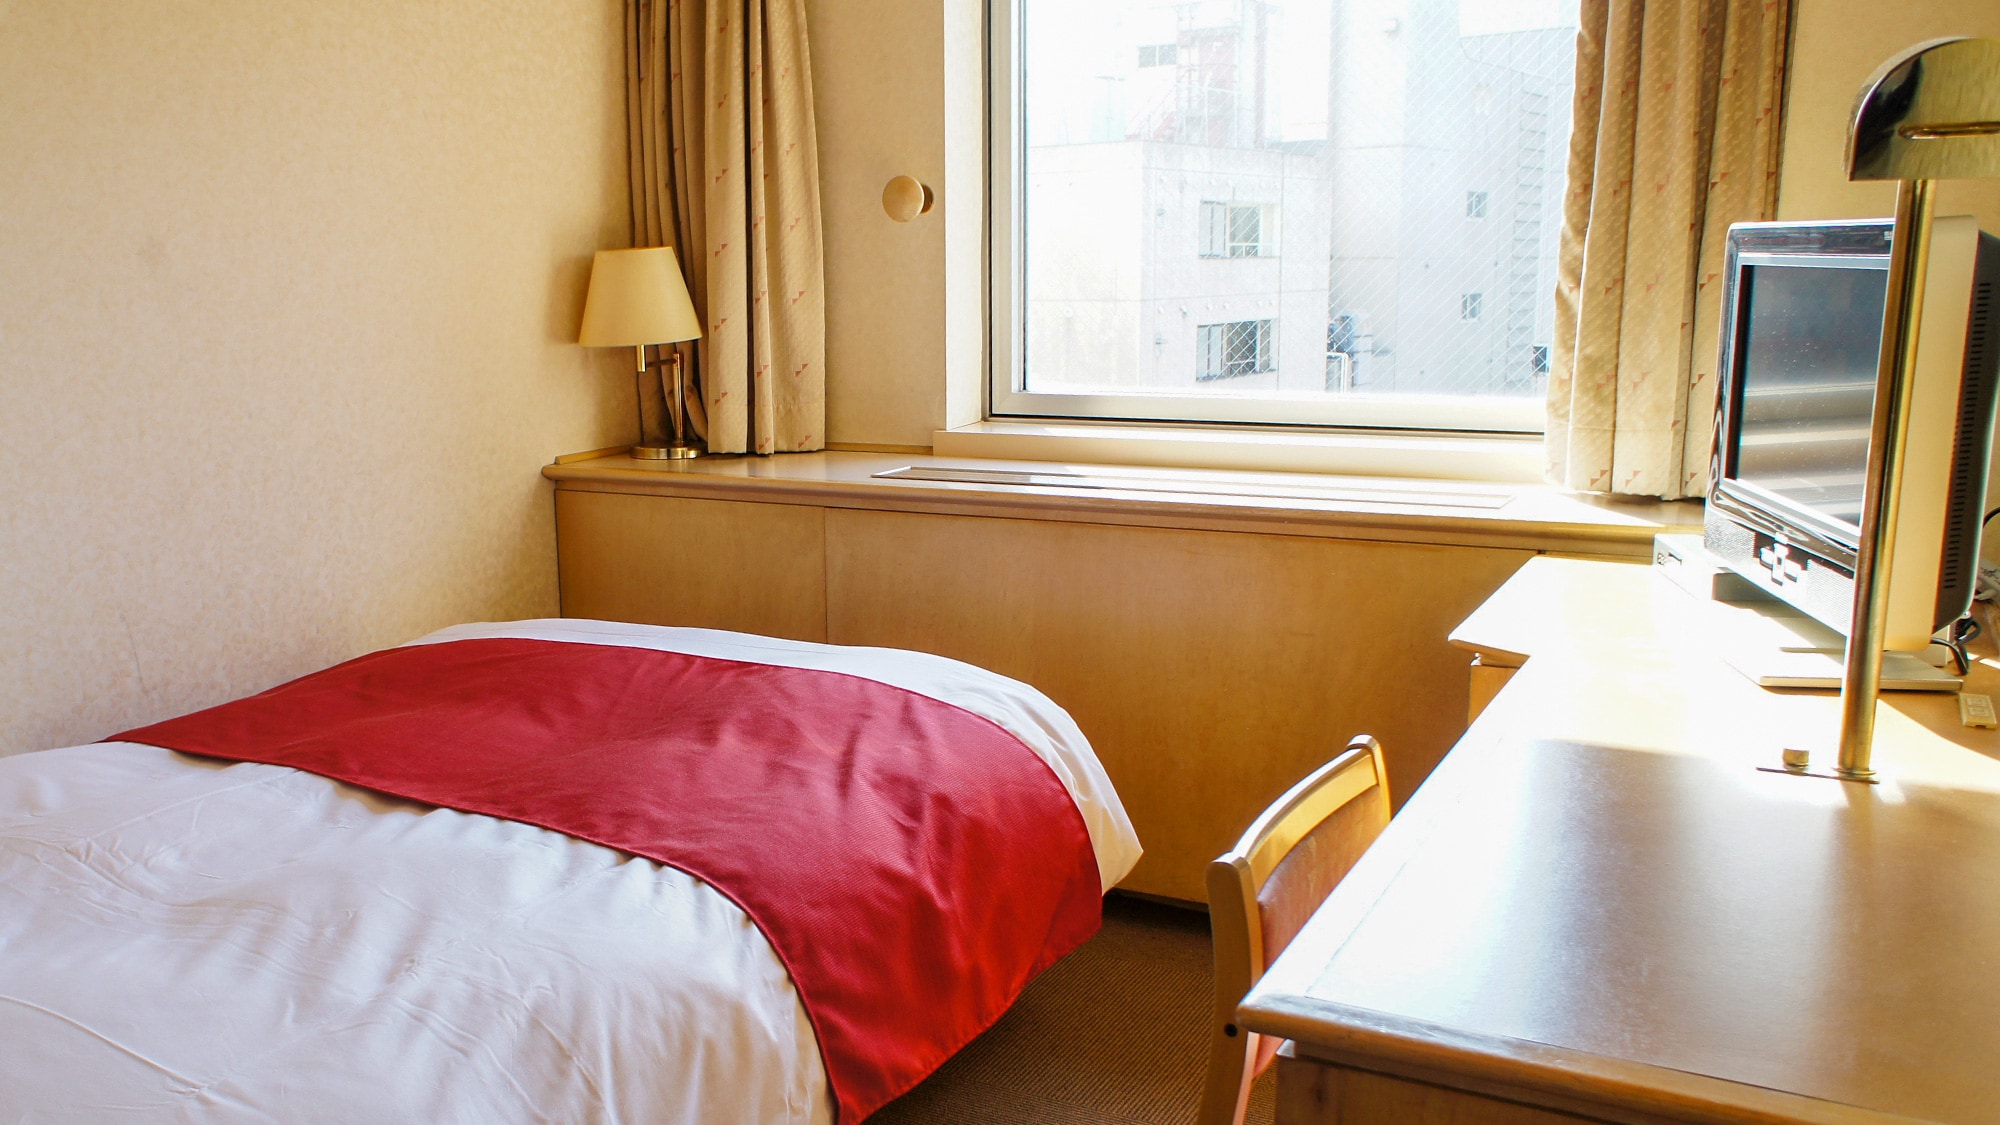 Semi-double room (bed width 120 cm)